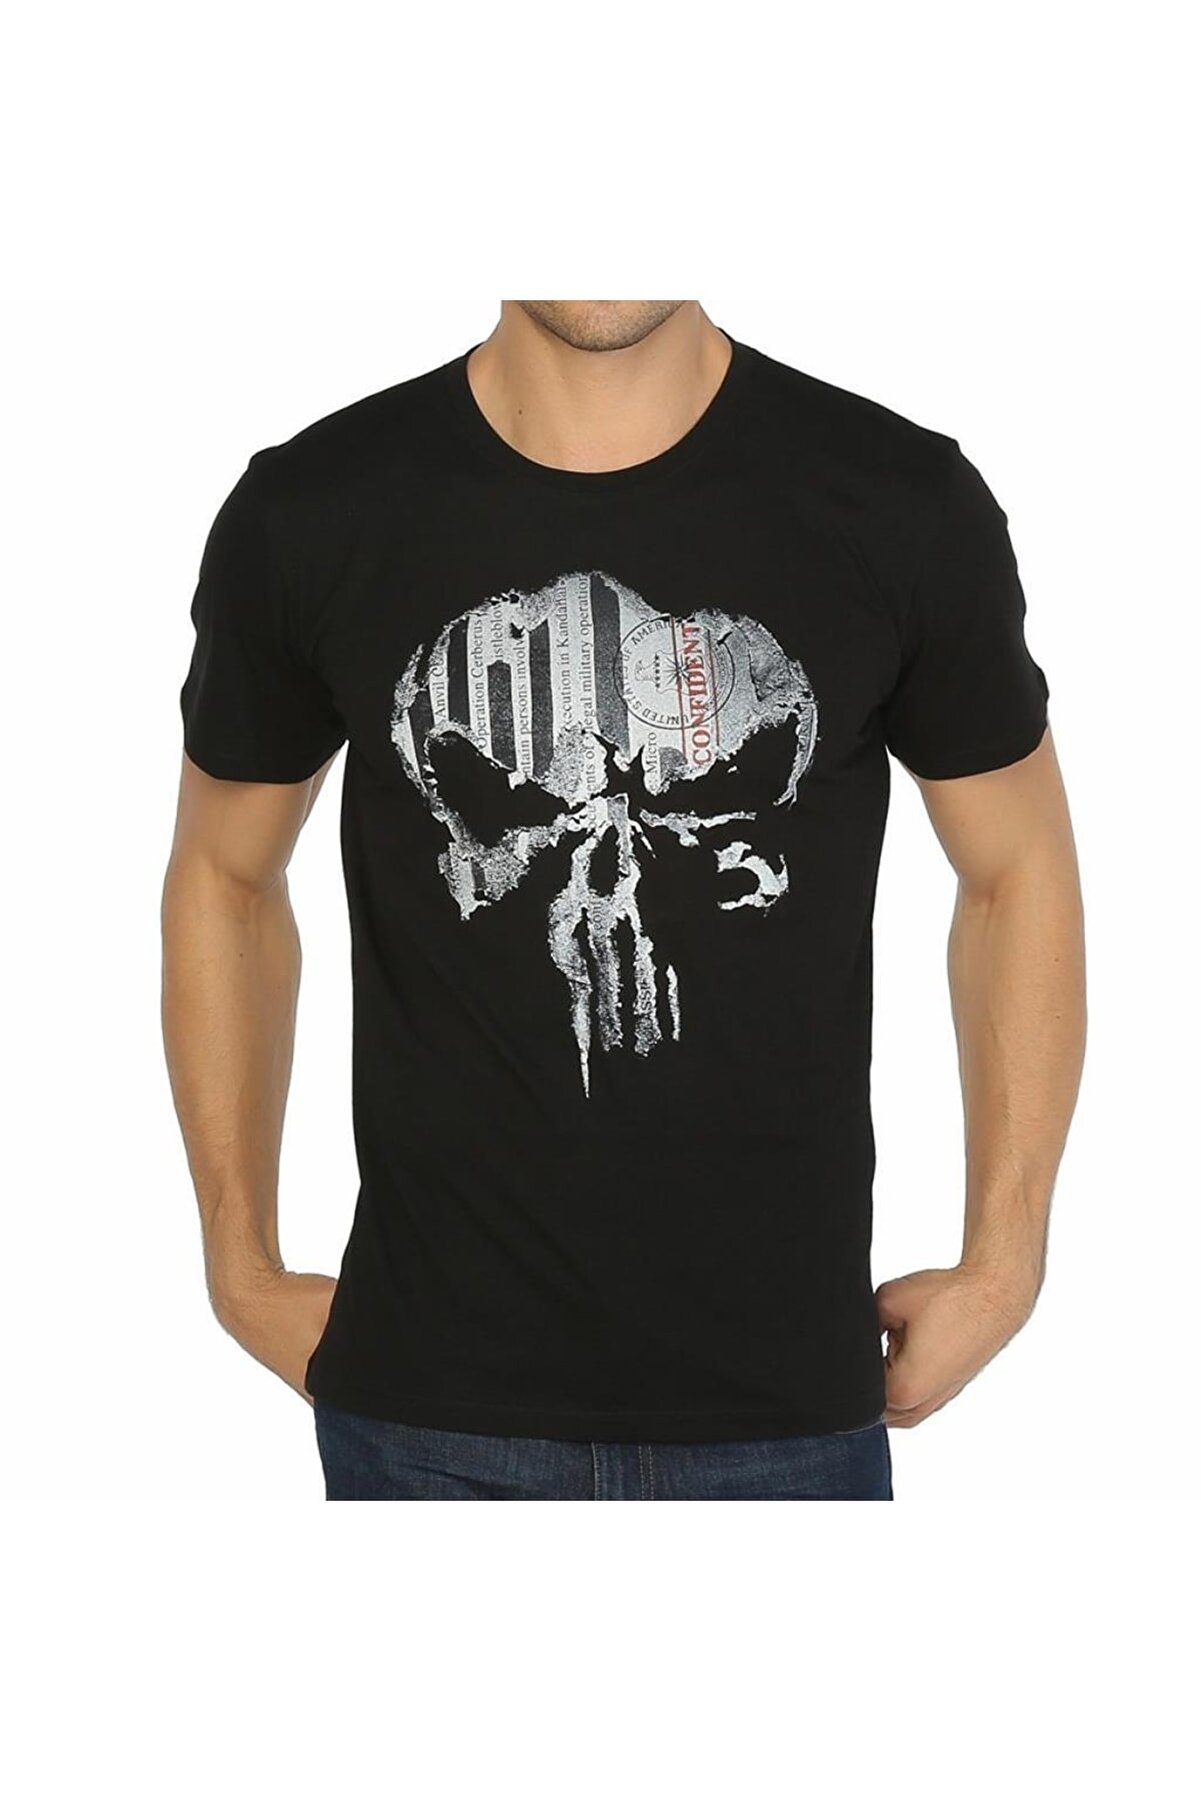 Bant Giyim - The Punisher Siyah Erkek T-shirt Tişört